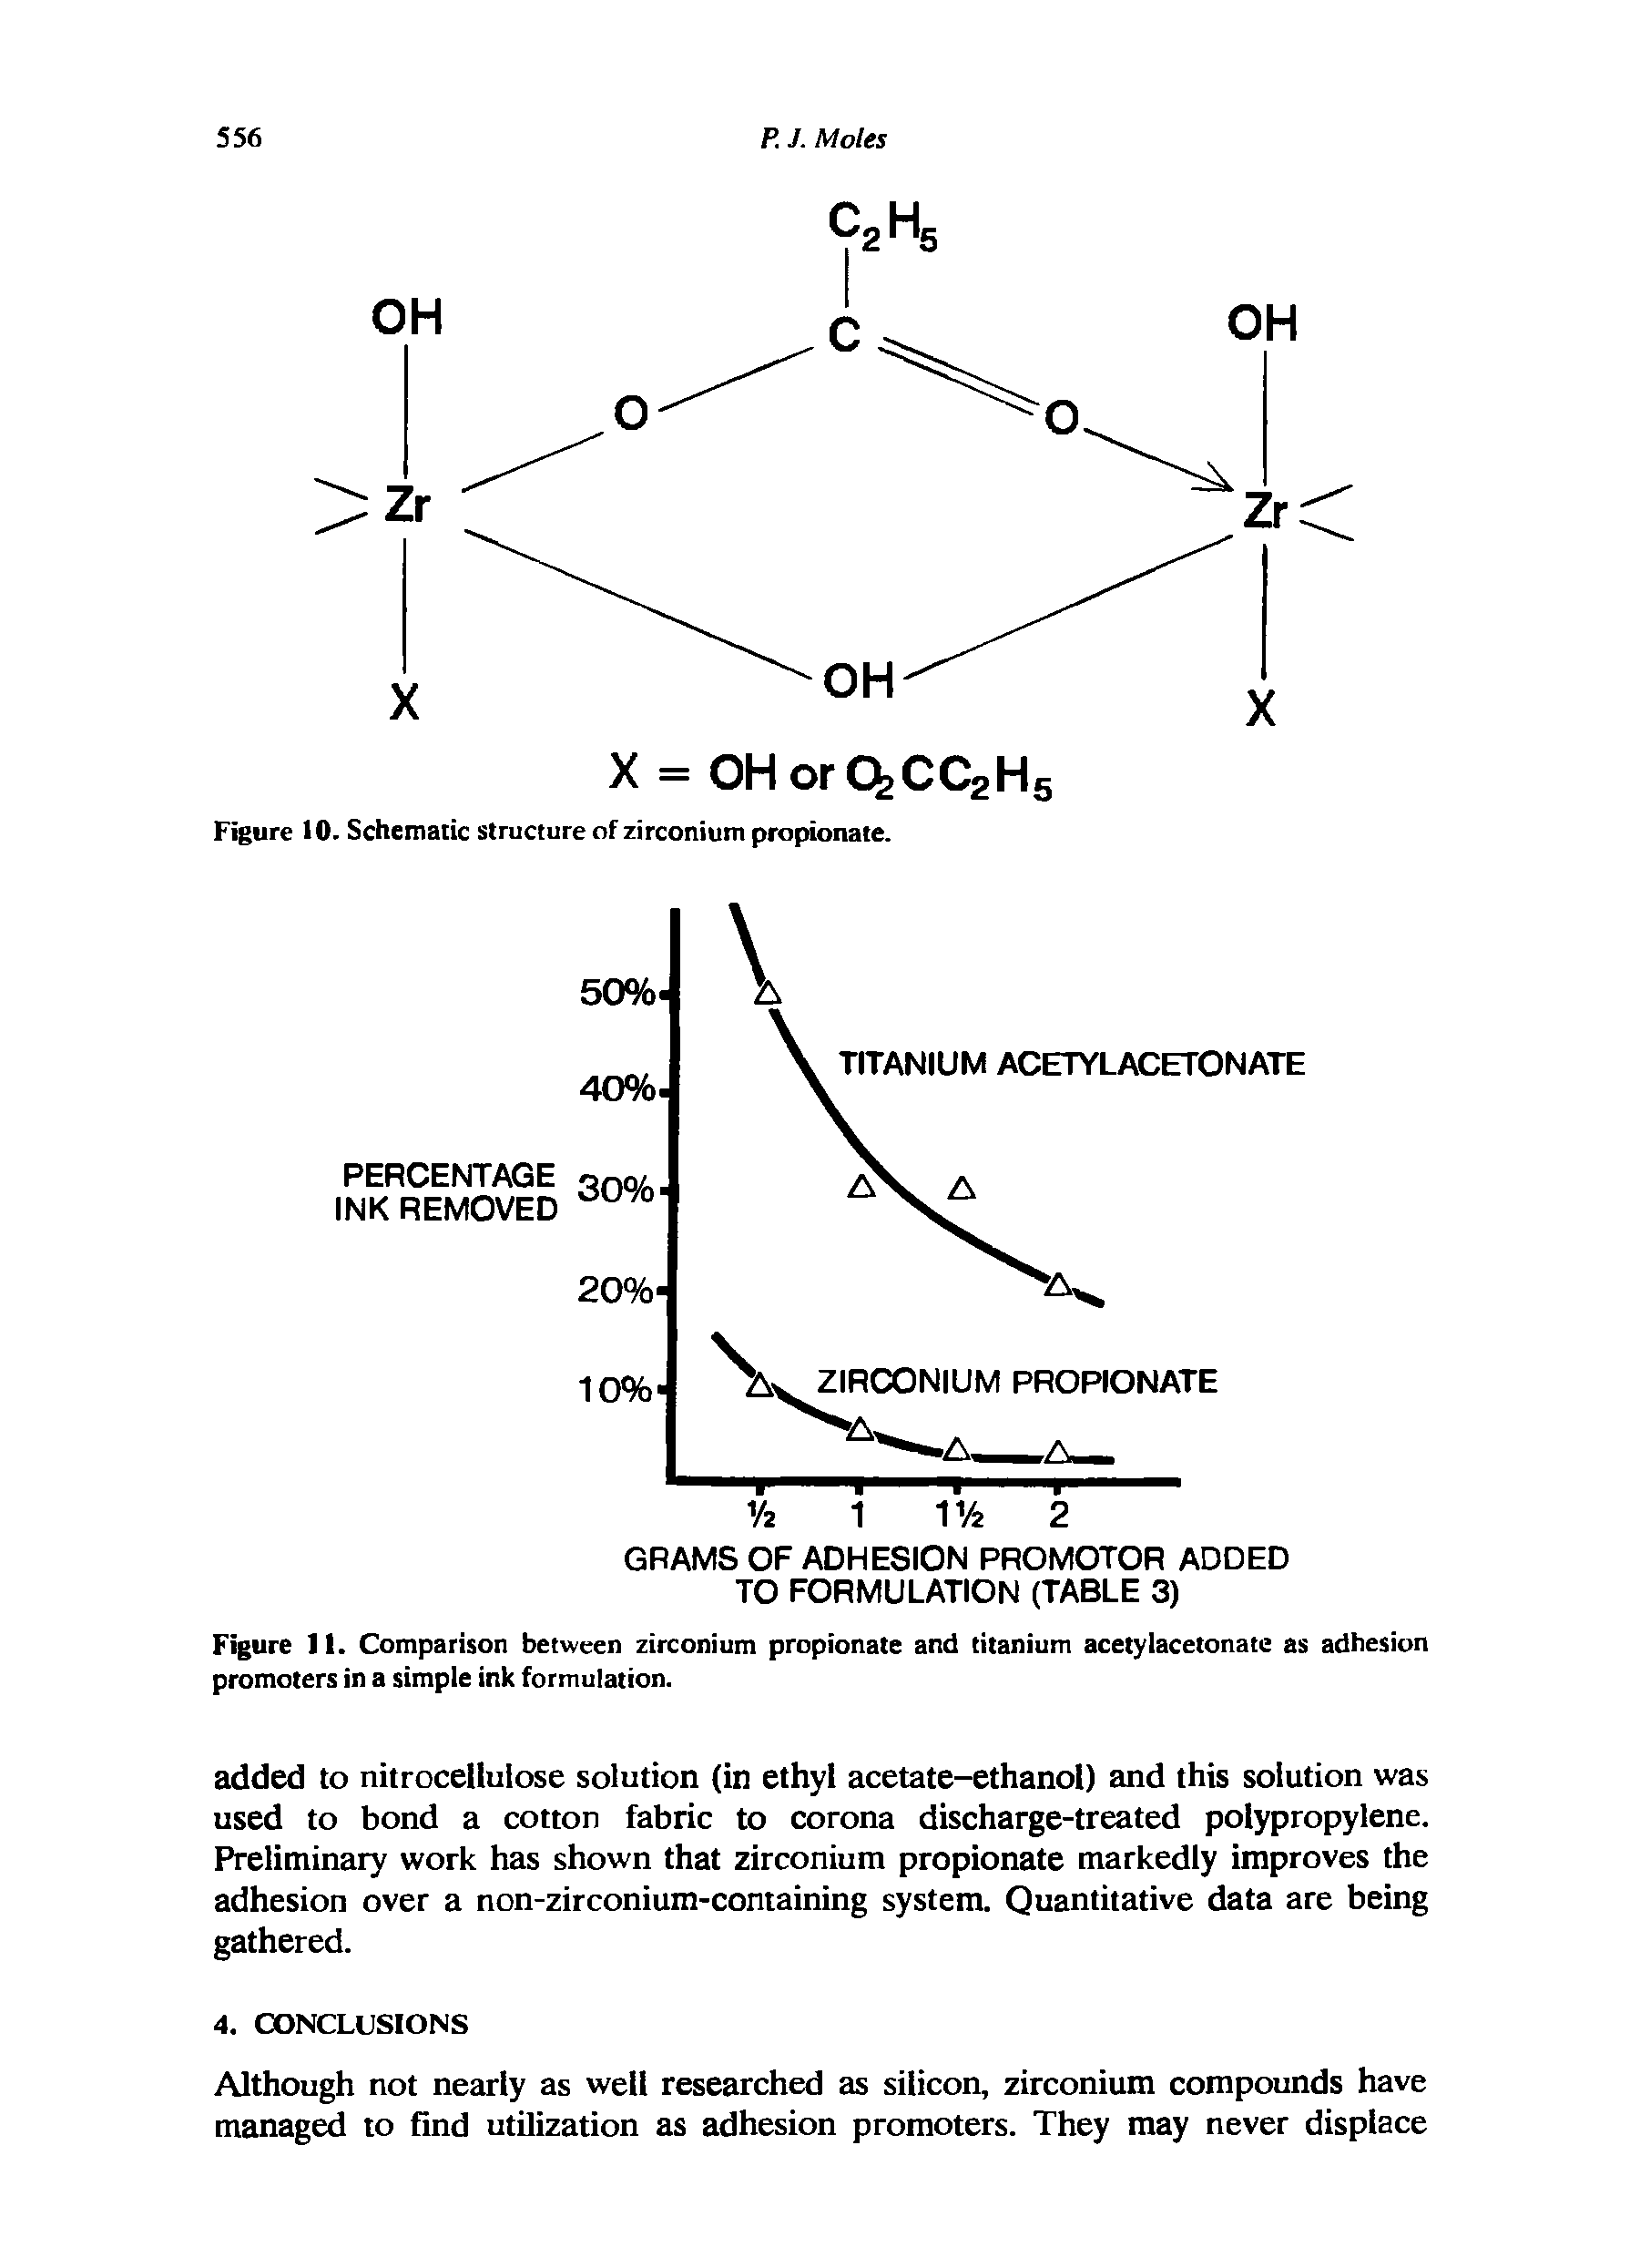 Figure 11. Comparison between zirconium propionate and titanium acetylacetonate as adhesion promoters in a simple ink formulation.